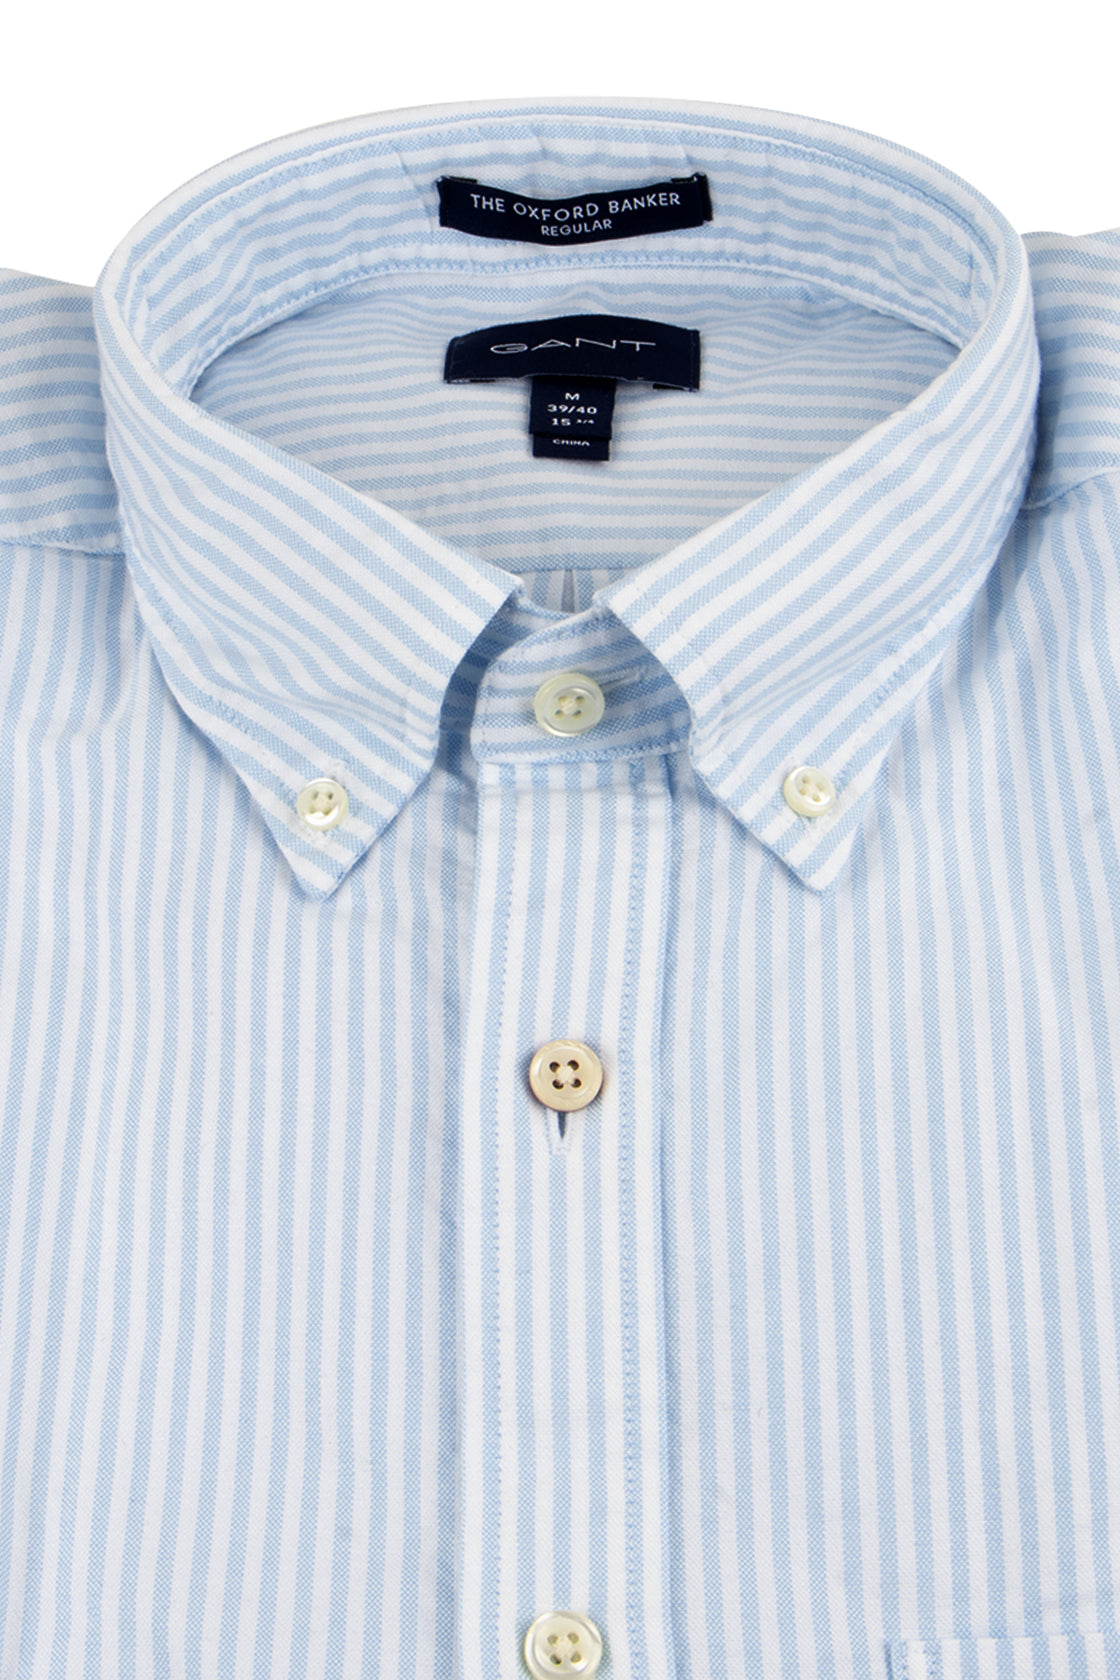 Gant Regular Fit Oxford Banker Shirt Capri Blue